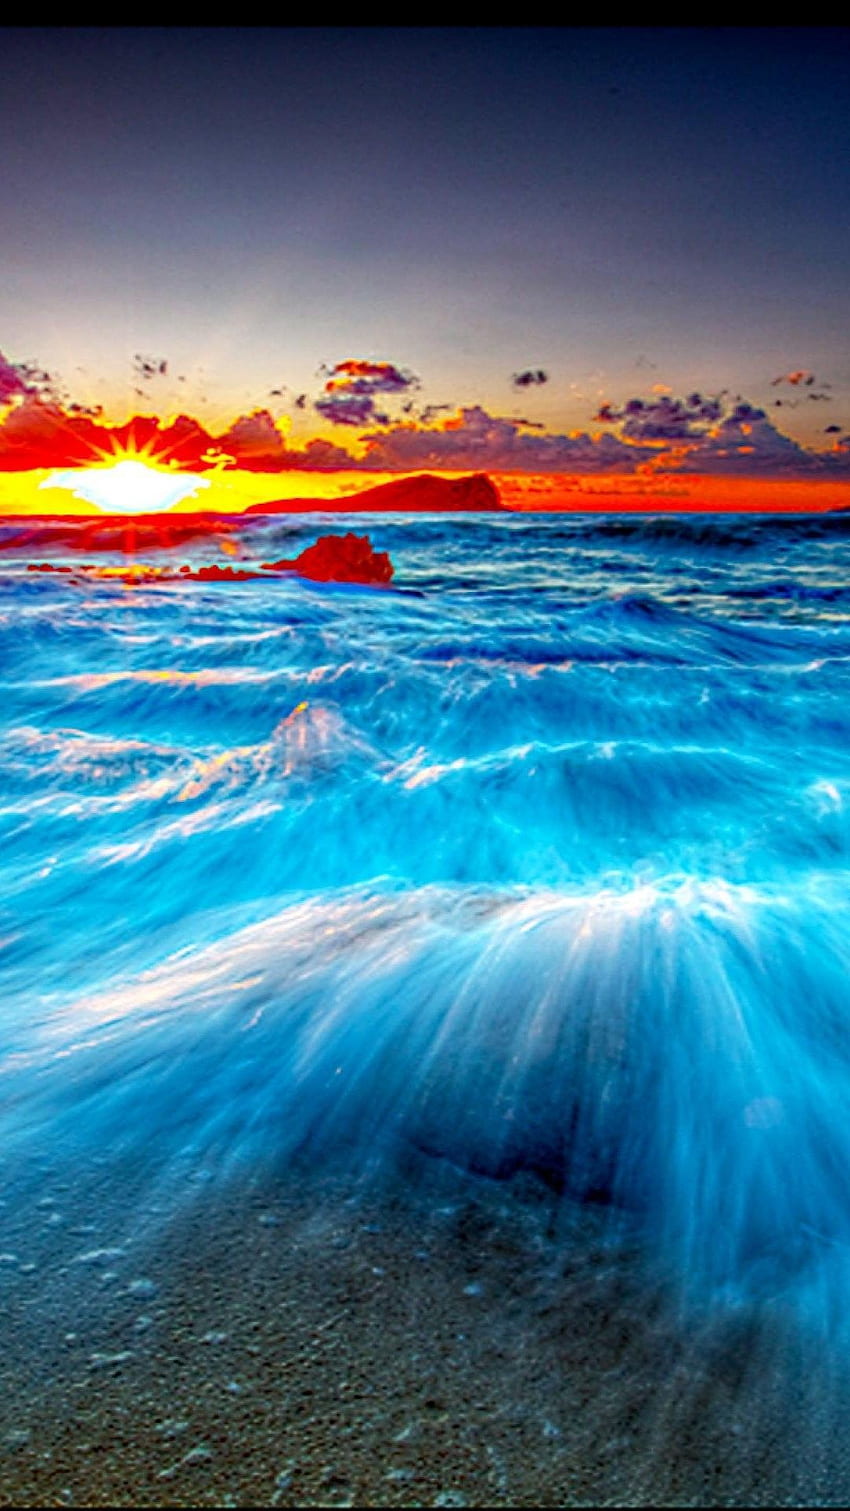 Ocean Rocks Wallpaper  iPhone Android  Desktop Backgrounds  Ocean  wallpaper Ocean rocks Beautiful places to travel